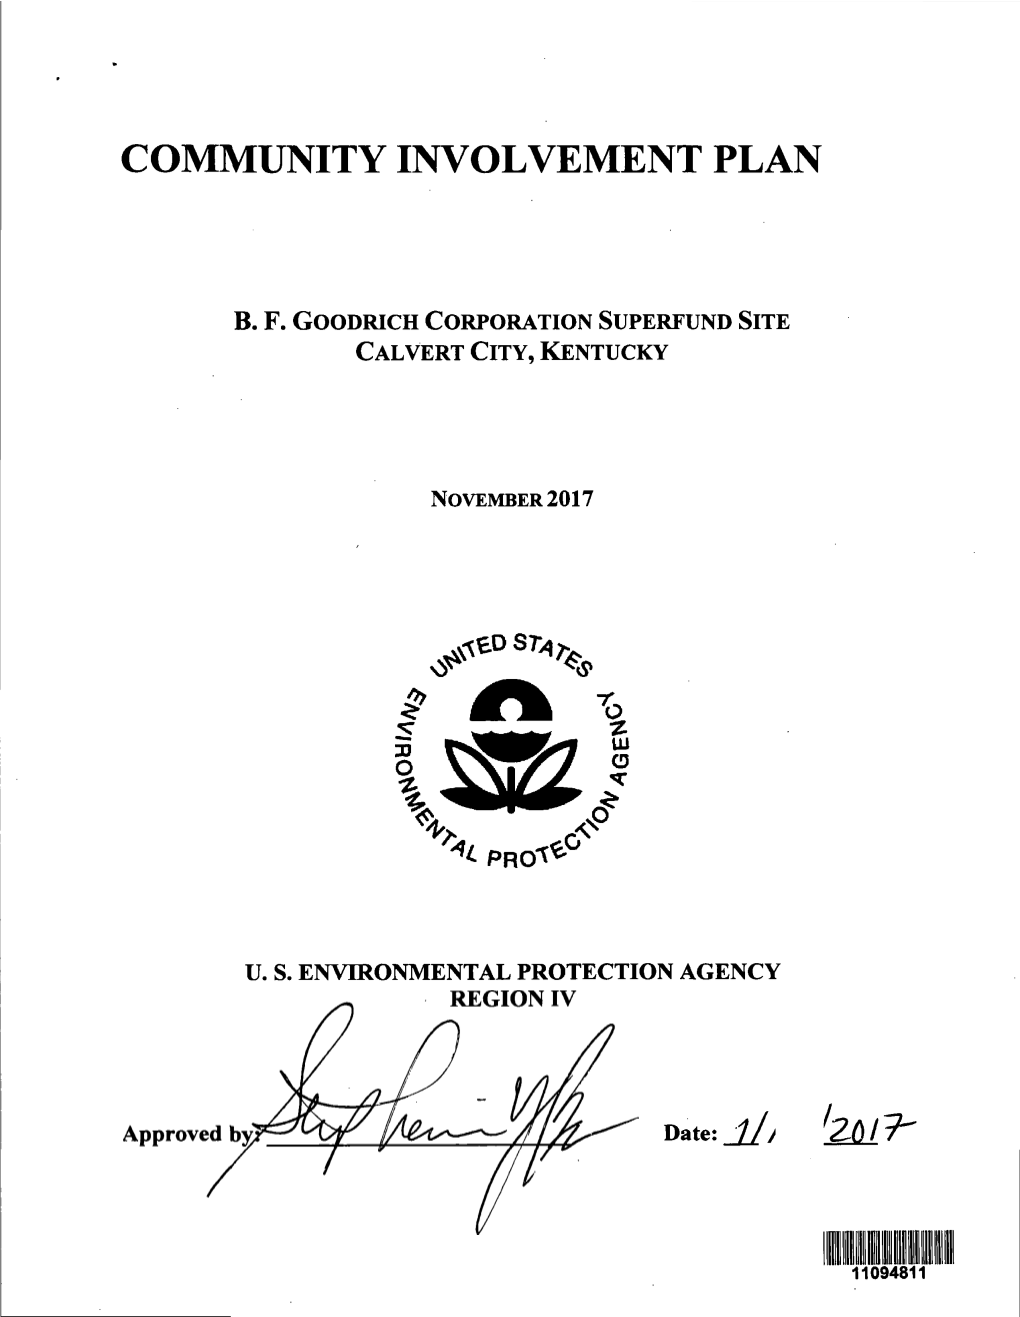 Community Involvement Plan, B.F. Goodrich Corporation